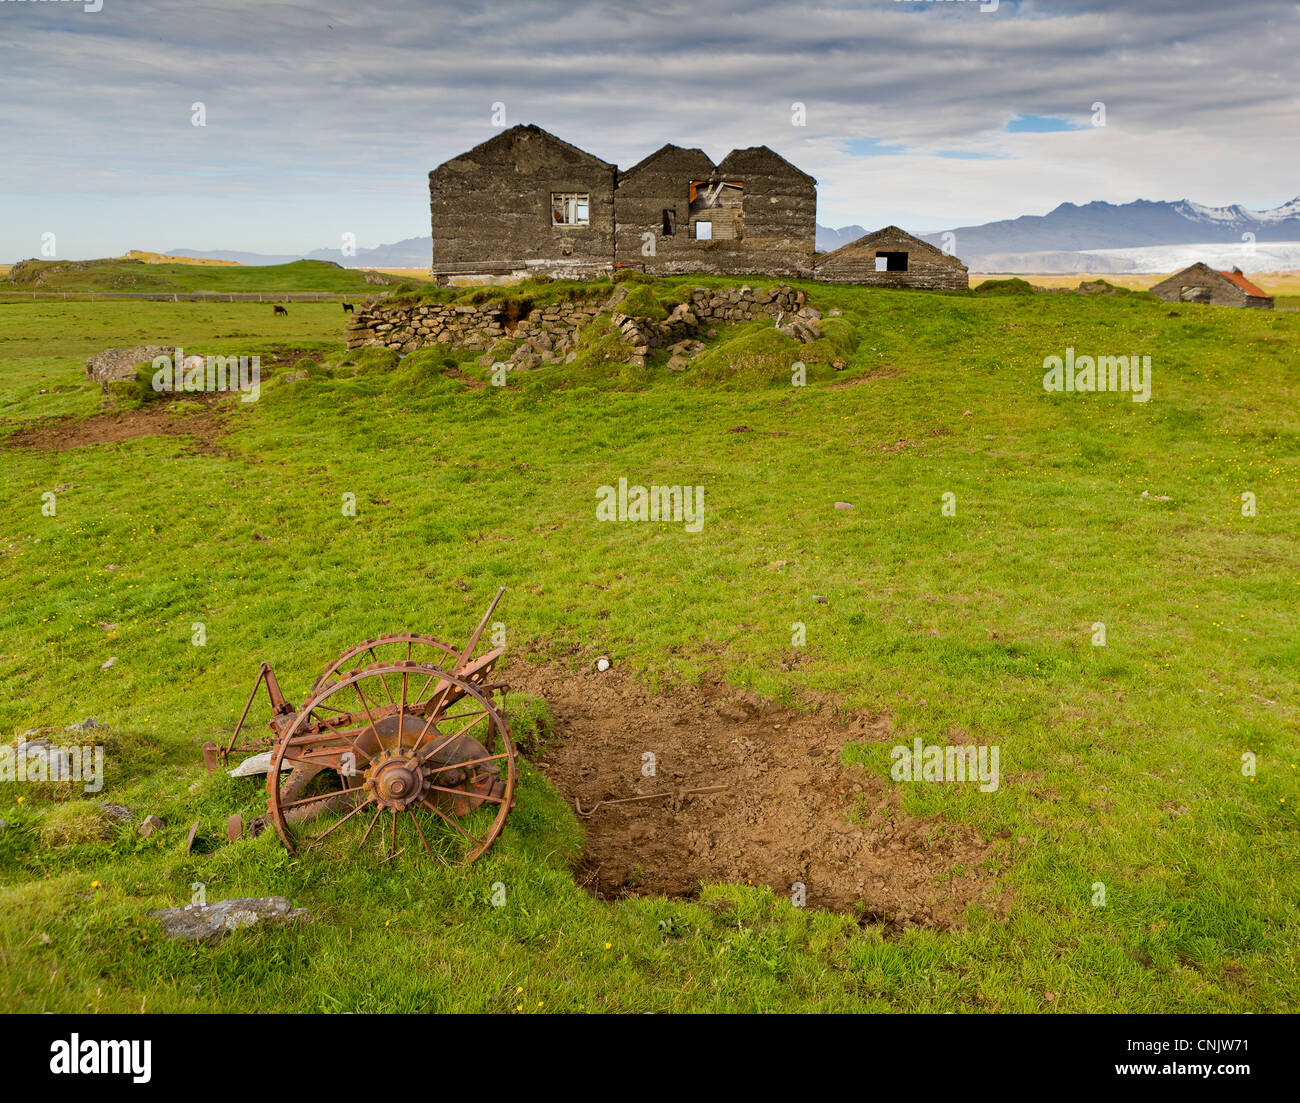 Vidbordssel farm with abandon house, Hornafjordur Iceland Stock Photo